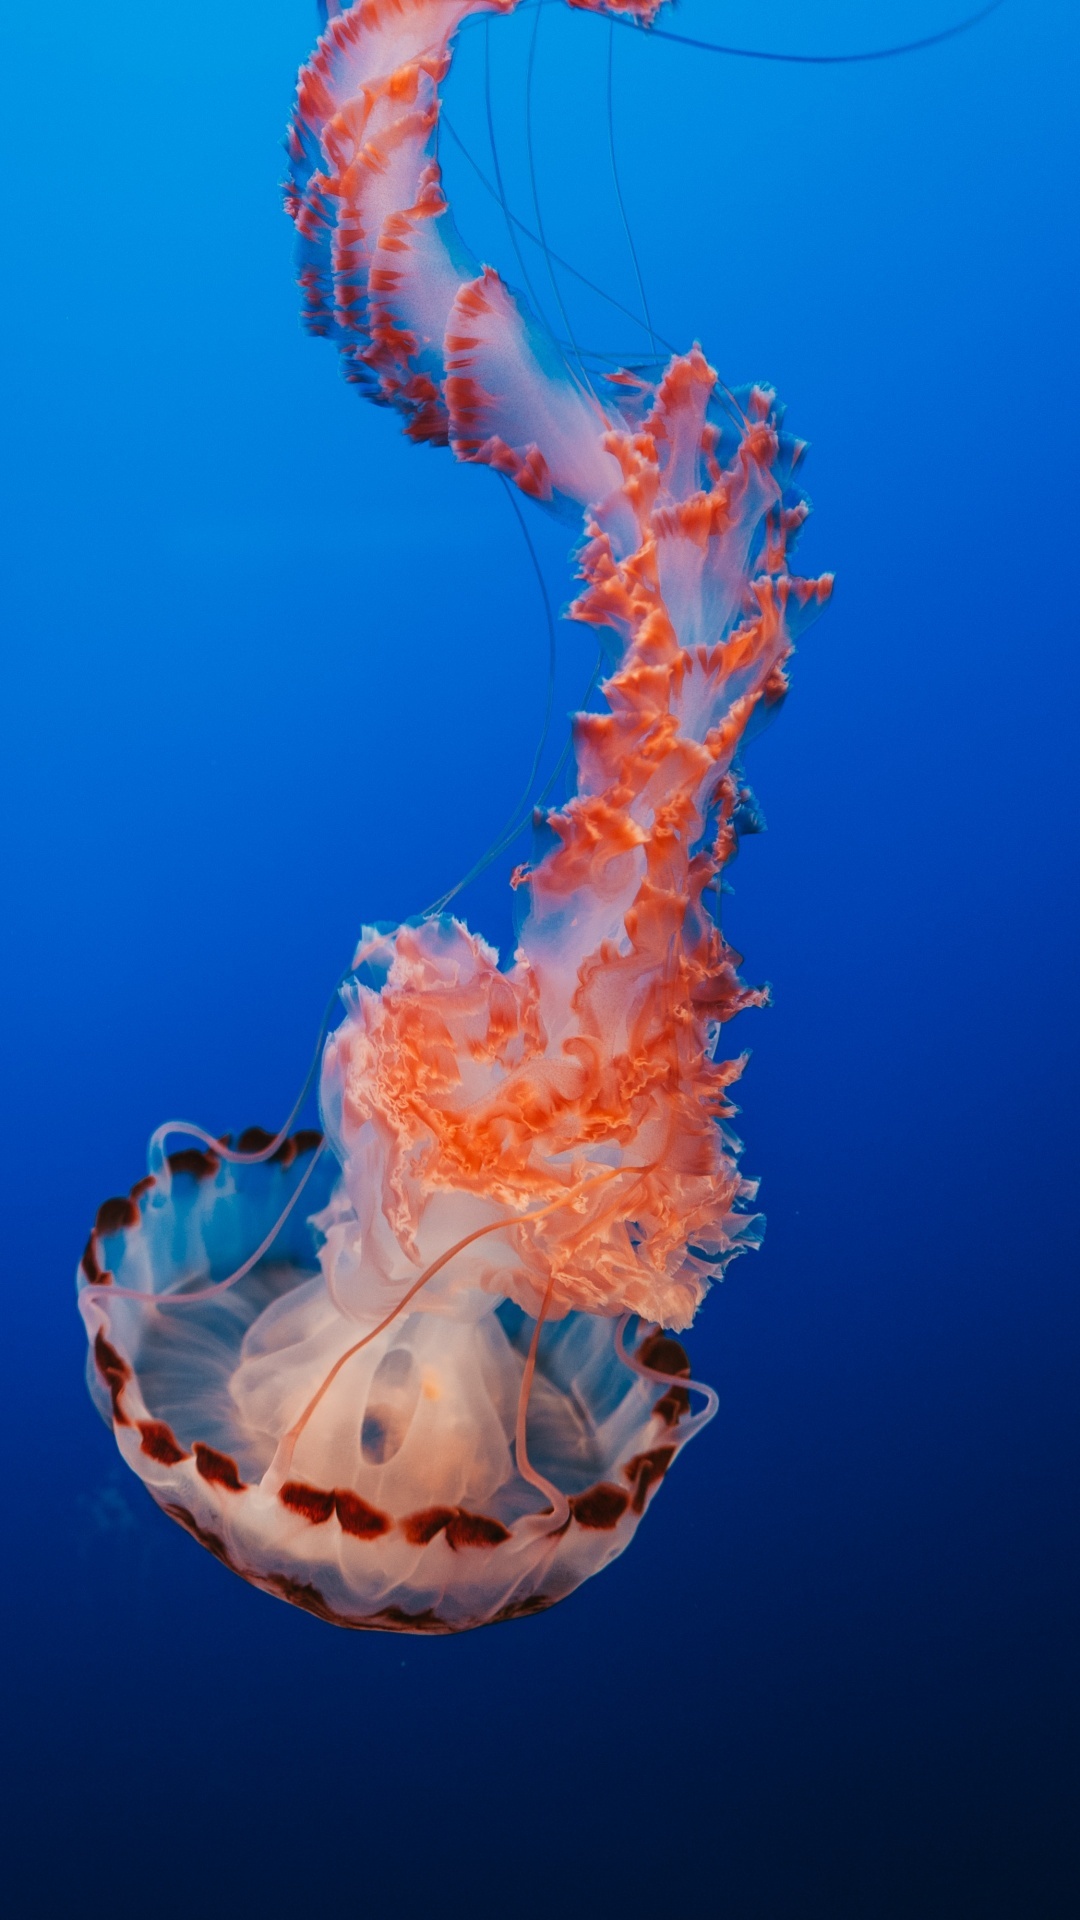 Stunning jellyfish wallpaper, Vibrant orange and blue colors, Aquarium ambiance, Underwater beauty, 1080x1920 Full HD Phone